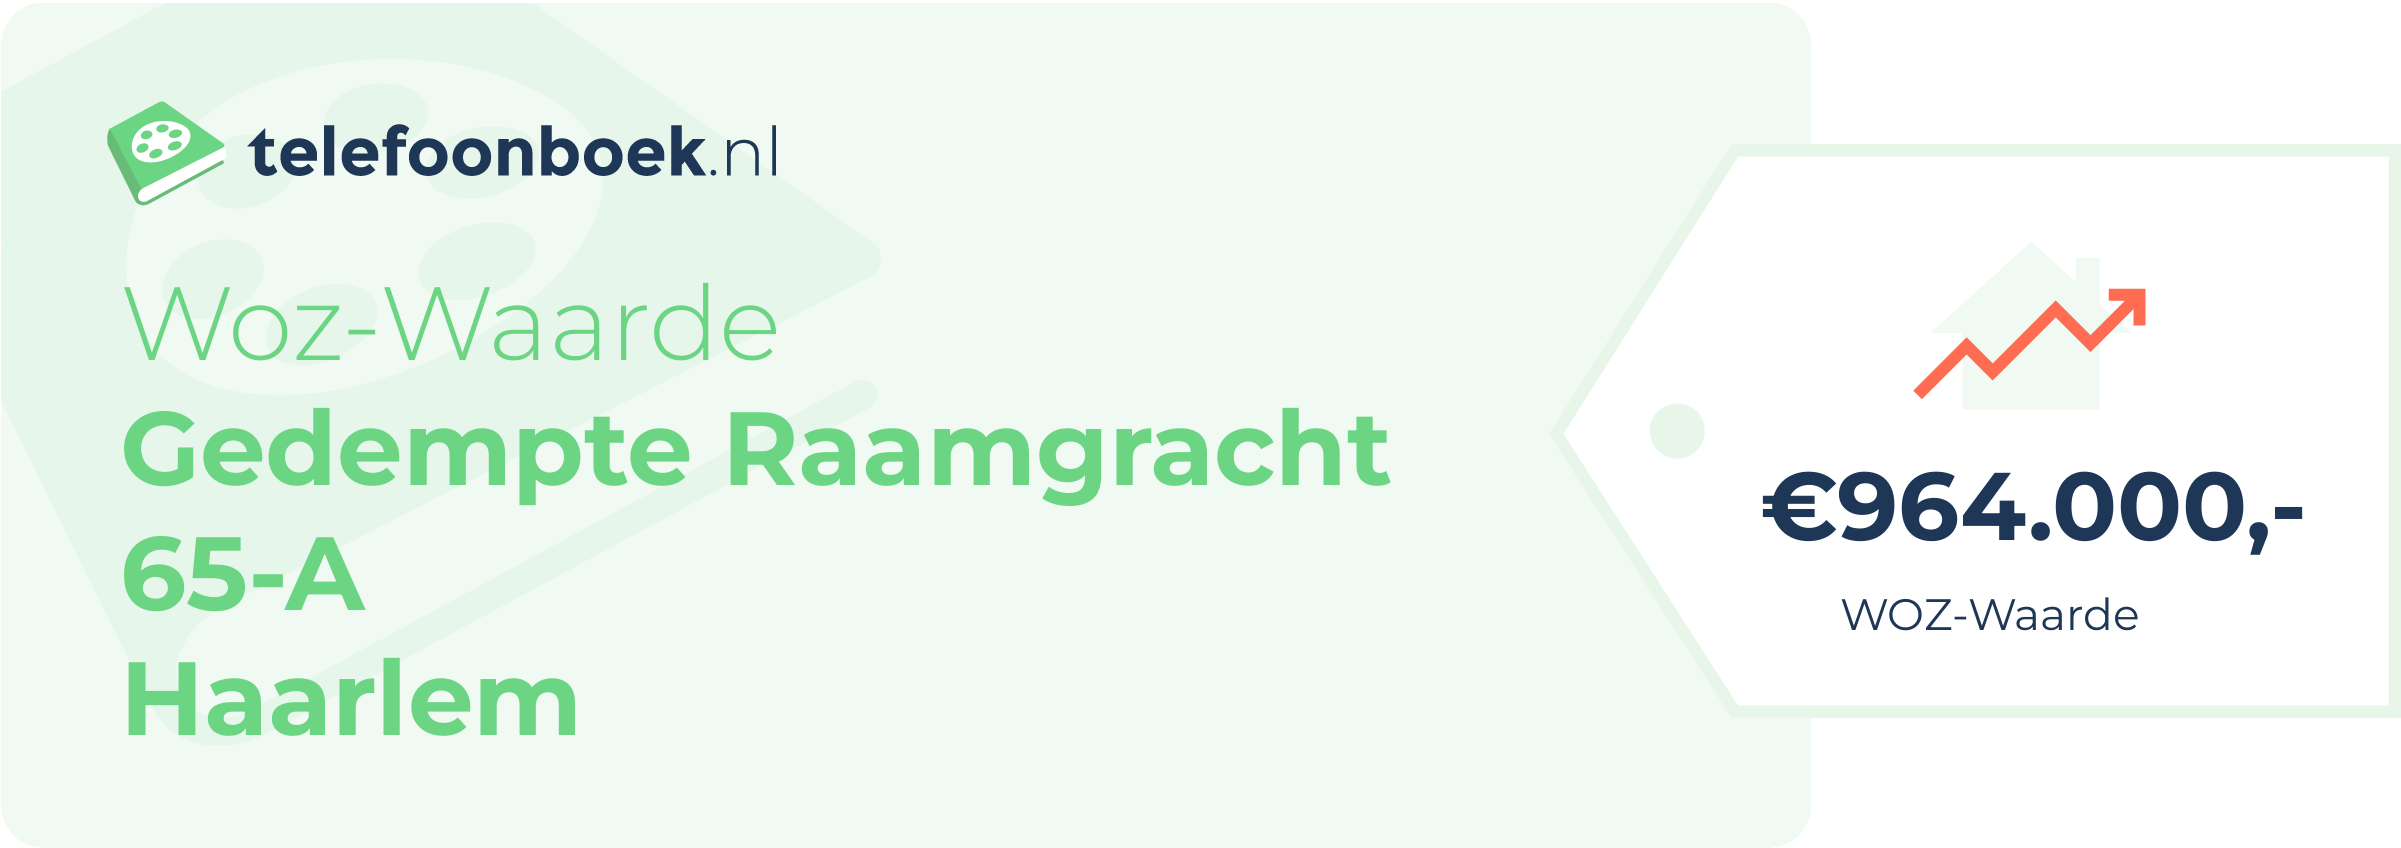 WOZ-waarde Gedempte Raamgracht 65-A Haarlem